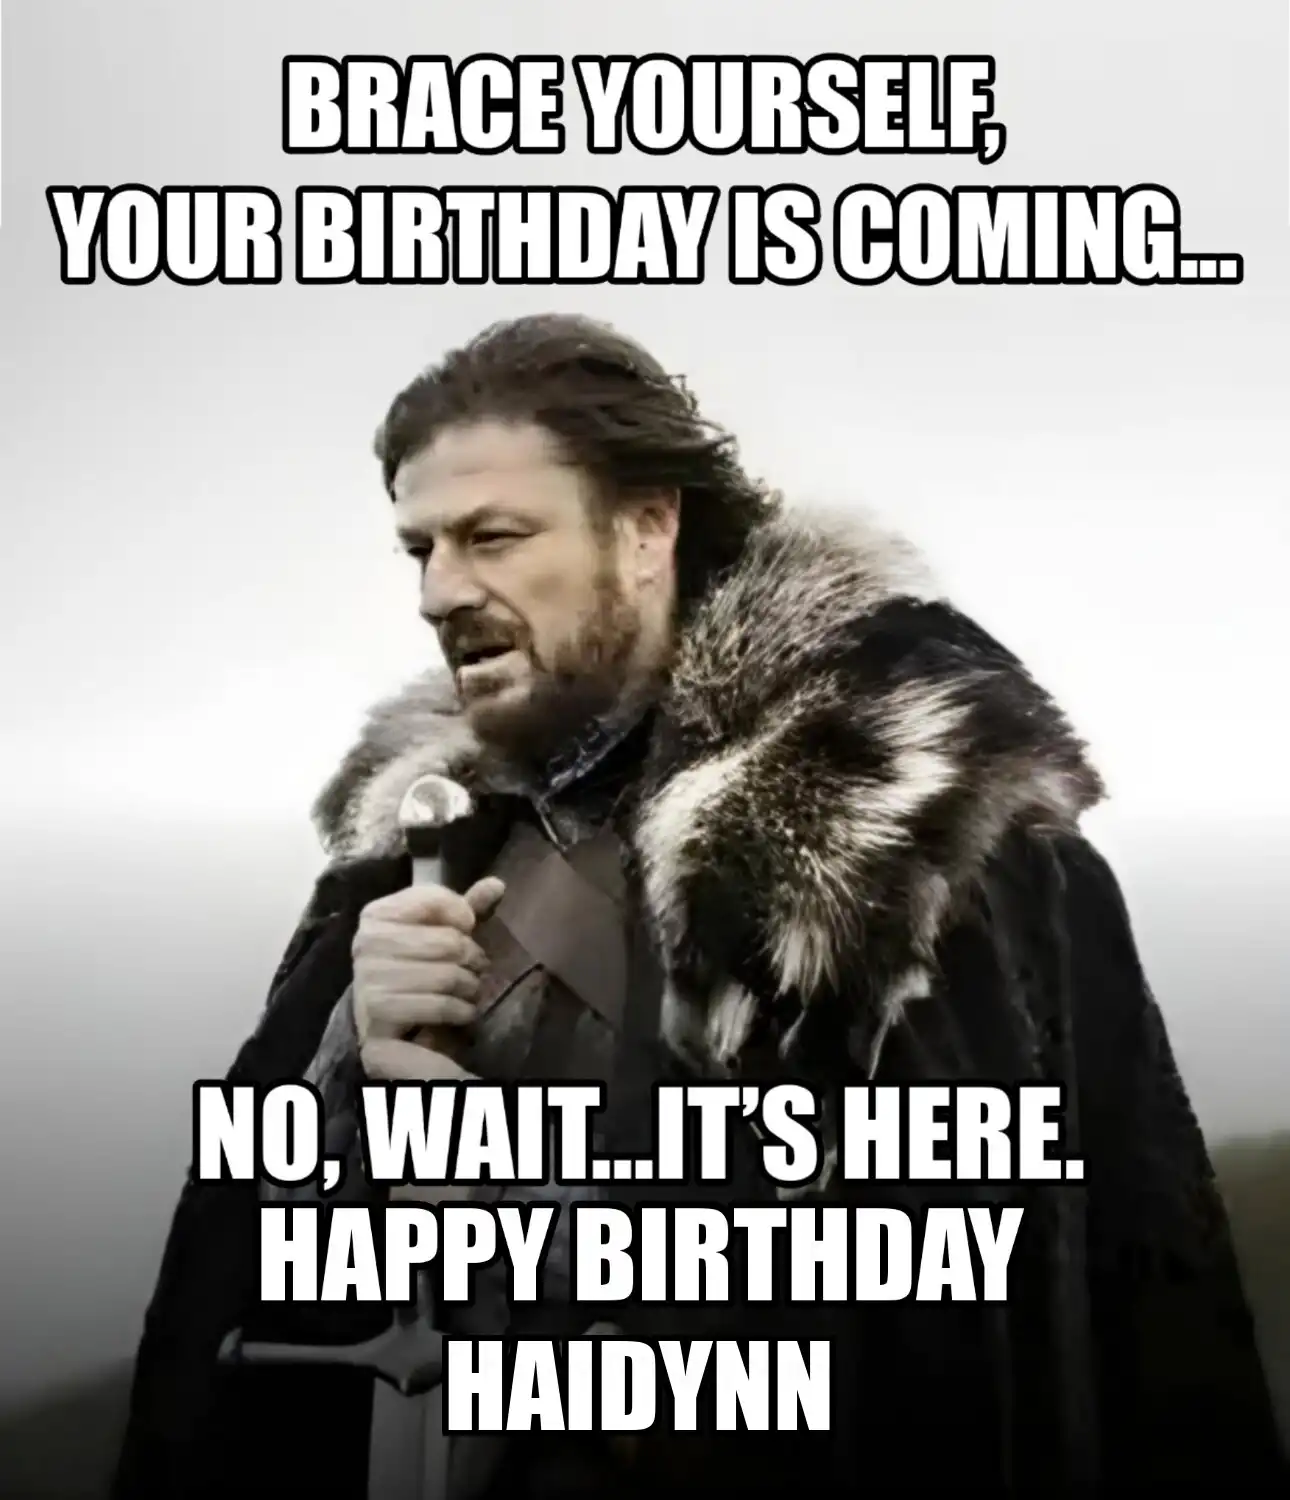 Happy Birthday Haidynn Brace Yourself Your Birthday Is Coming Meme